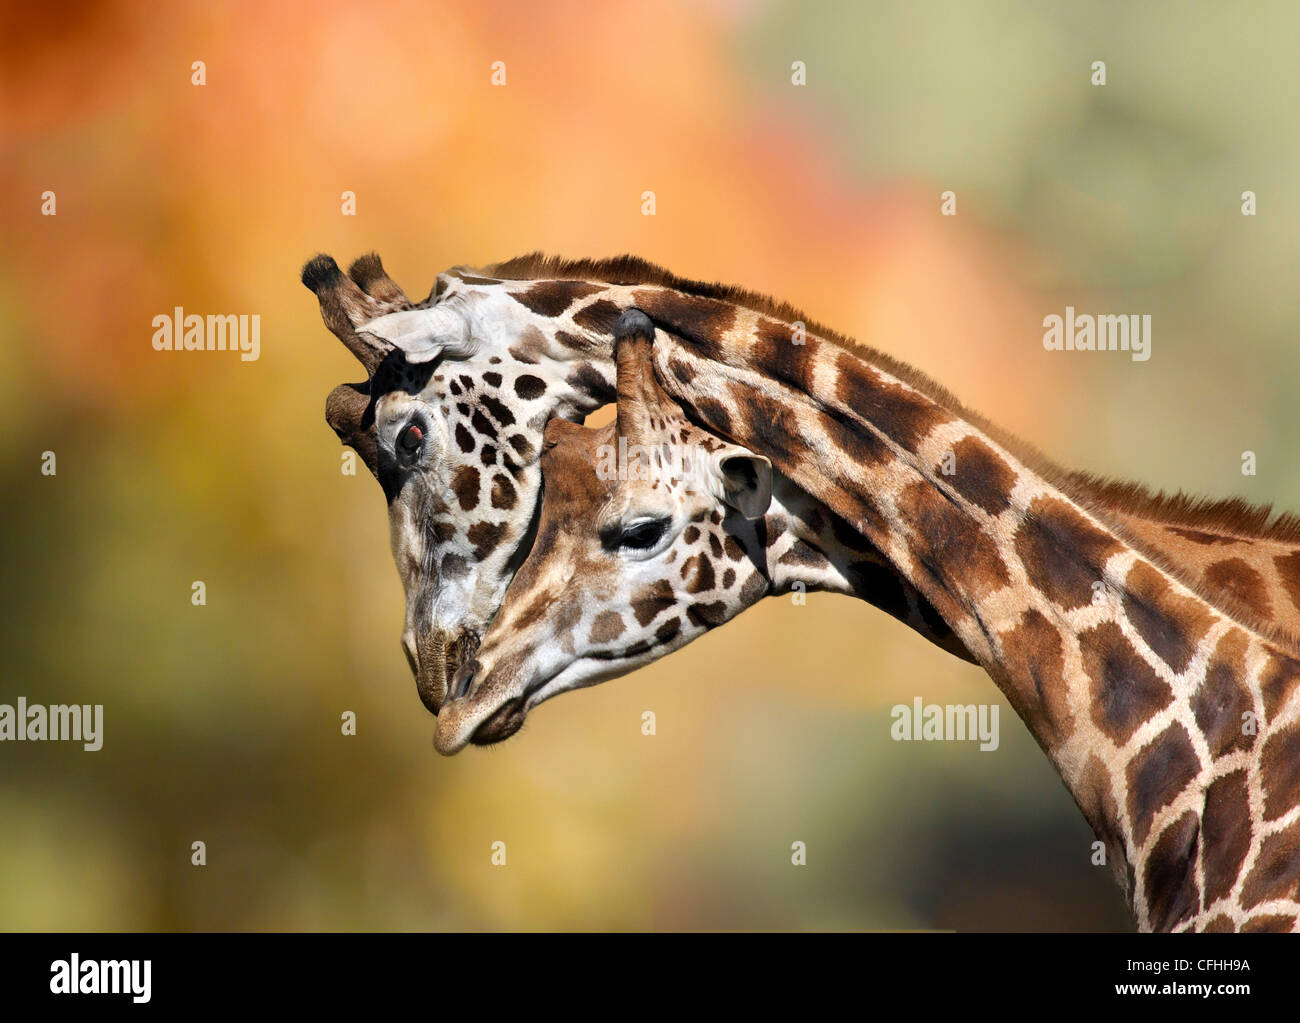 Two giraffes necking, Cabarceno, Spain Stock Photo